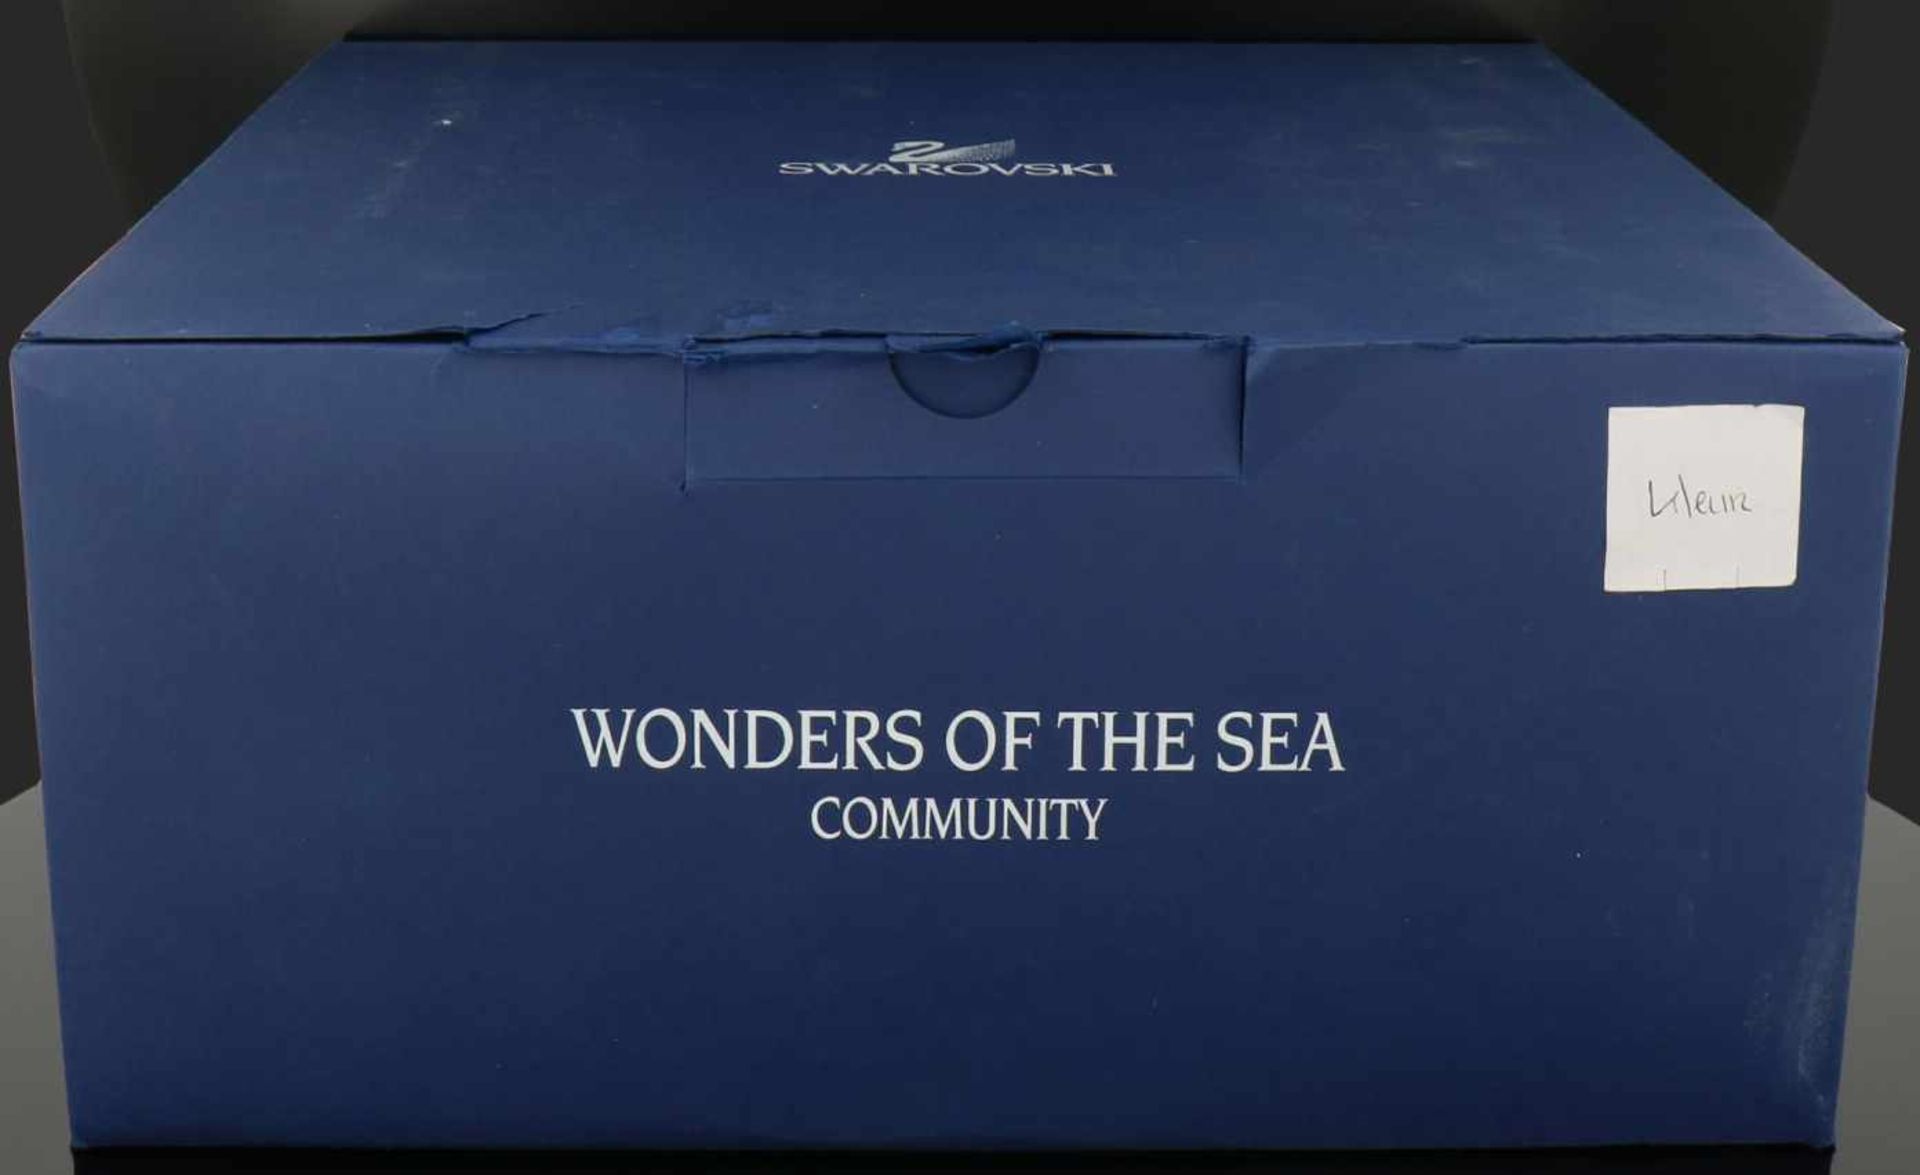 Swarovski "wonders off the sea" Community. - Bild 3 aus 3